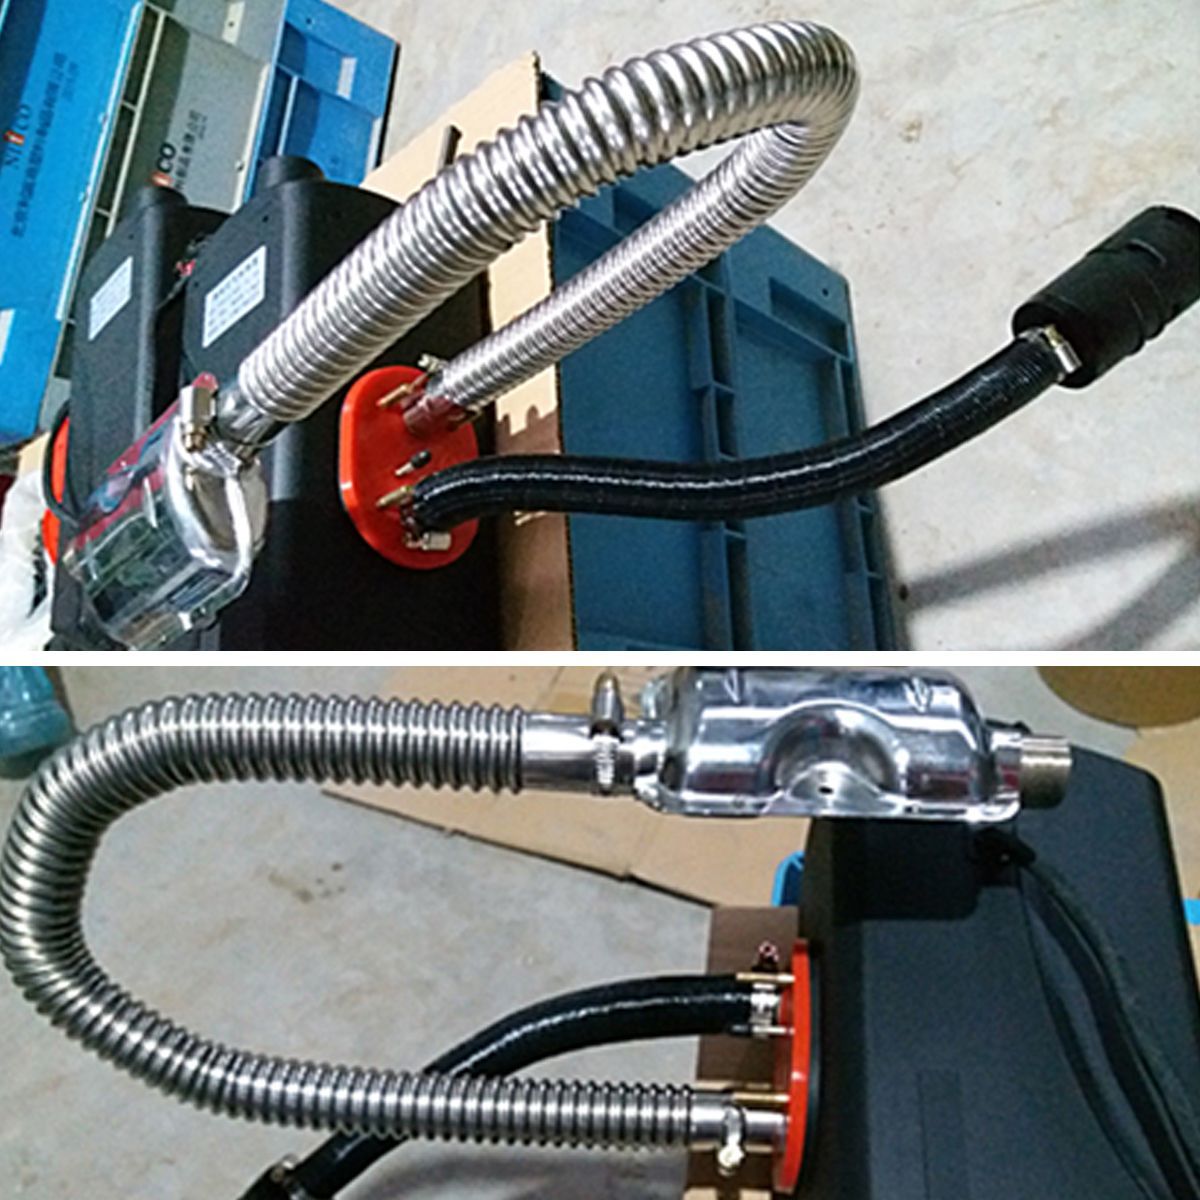 Car-Parking-Air-Heater-Tank-Exhaust-Pipe-Diesel-Gas-Vent-Hose-Stainless-Steel-Tube-1355236